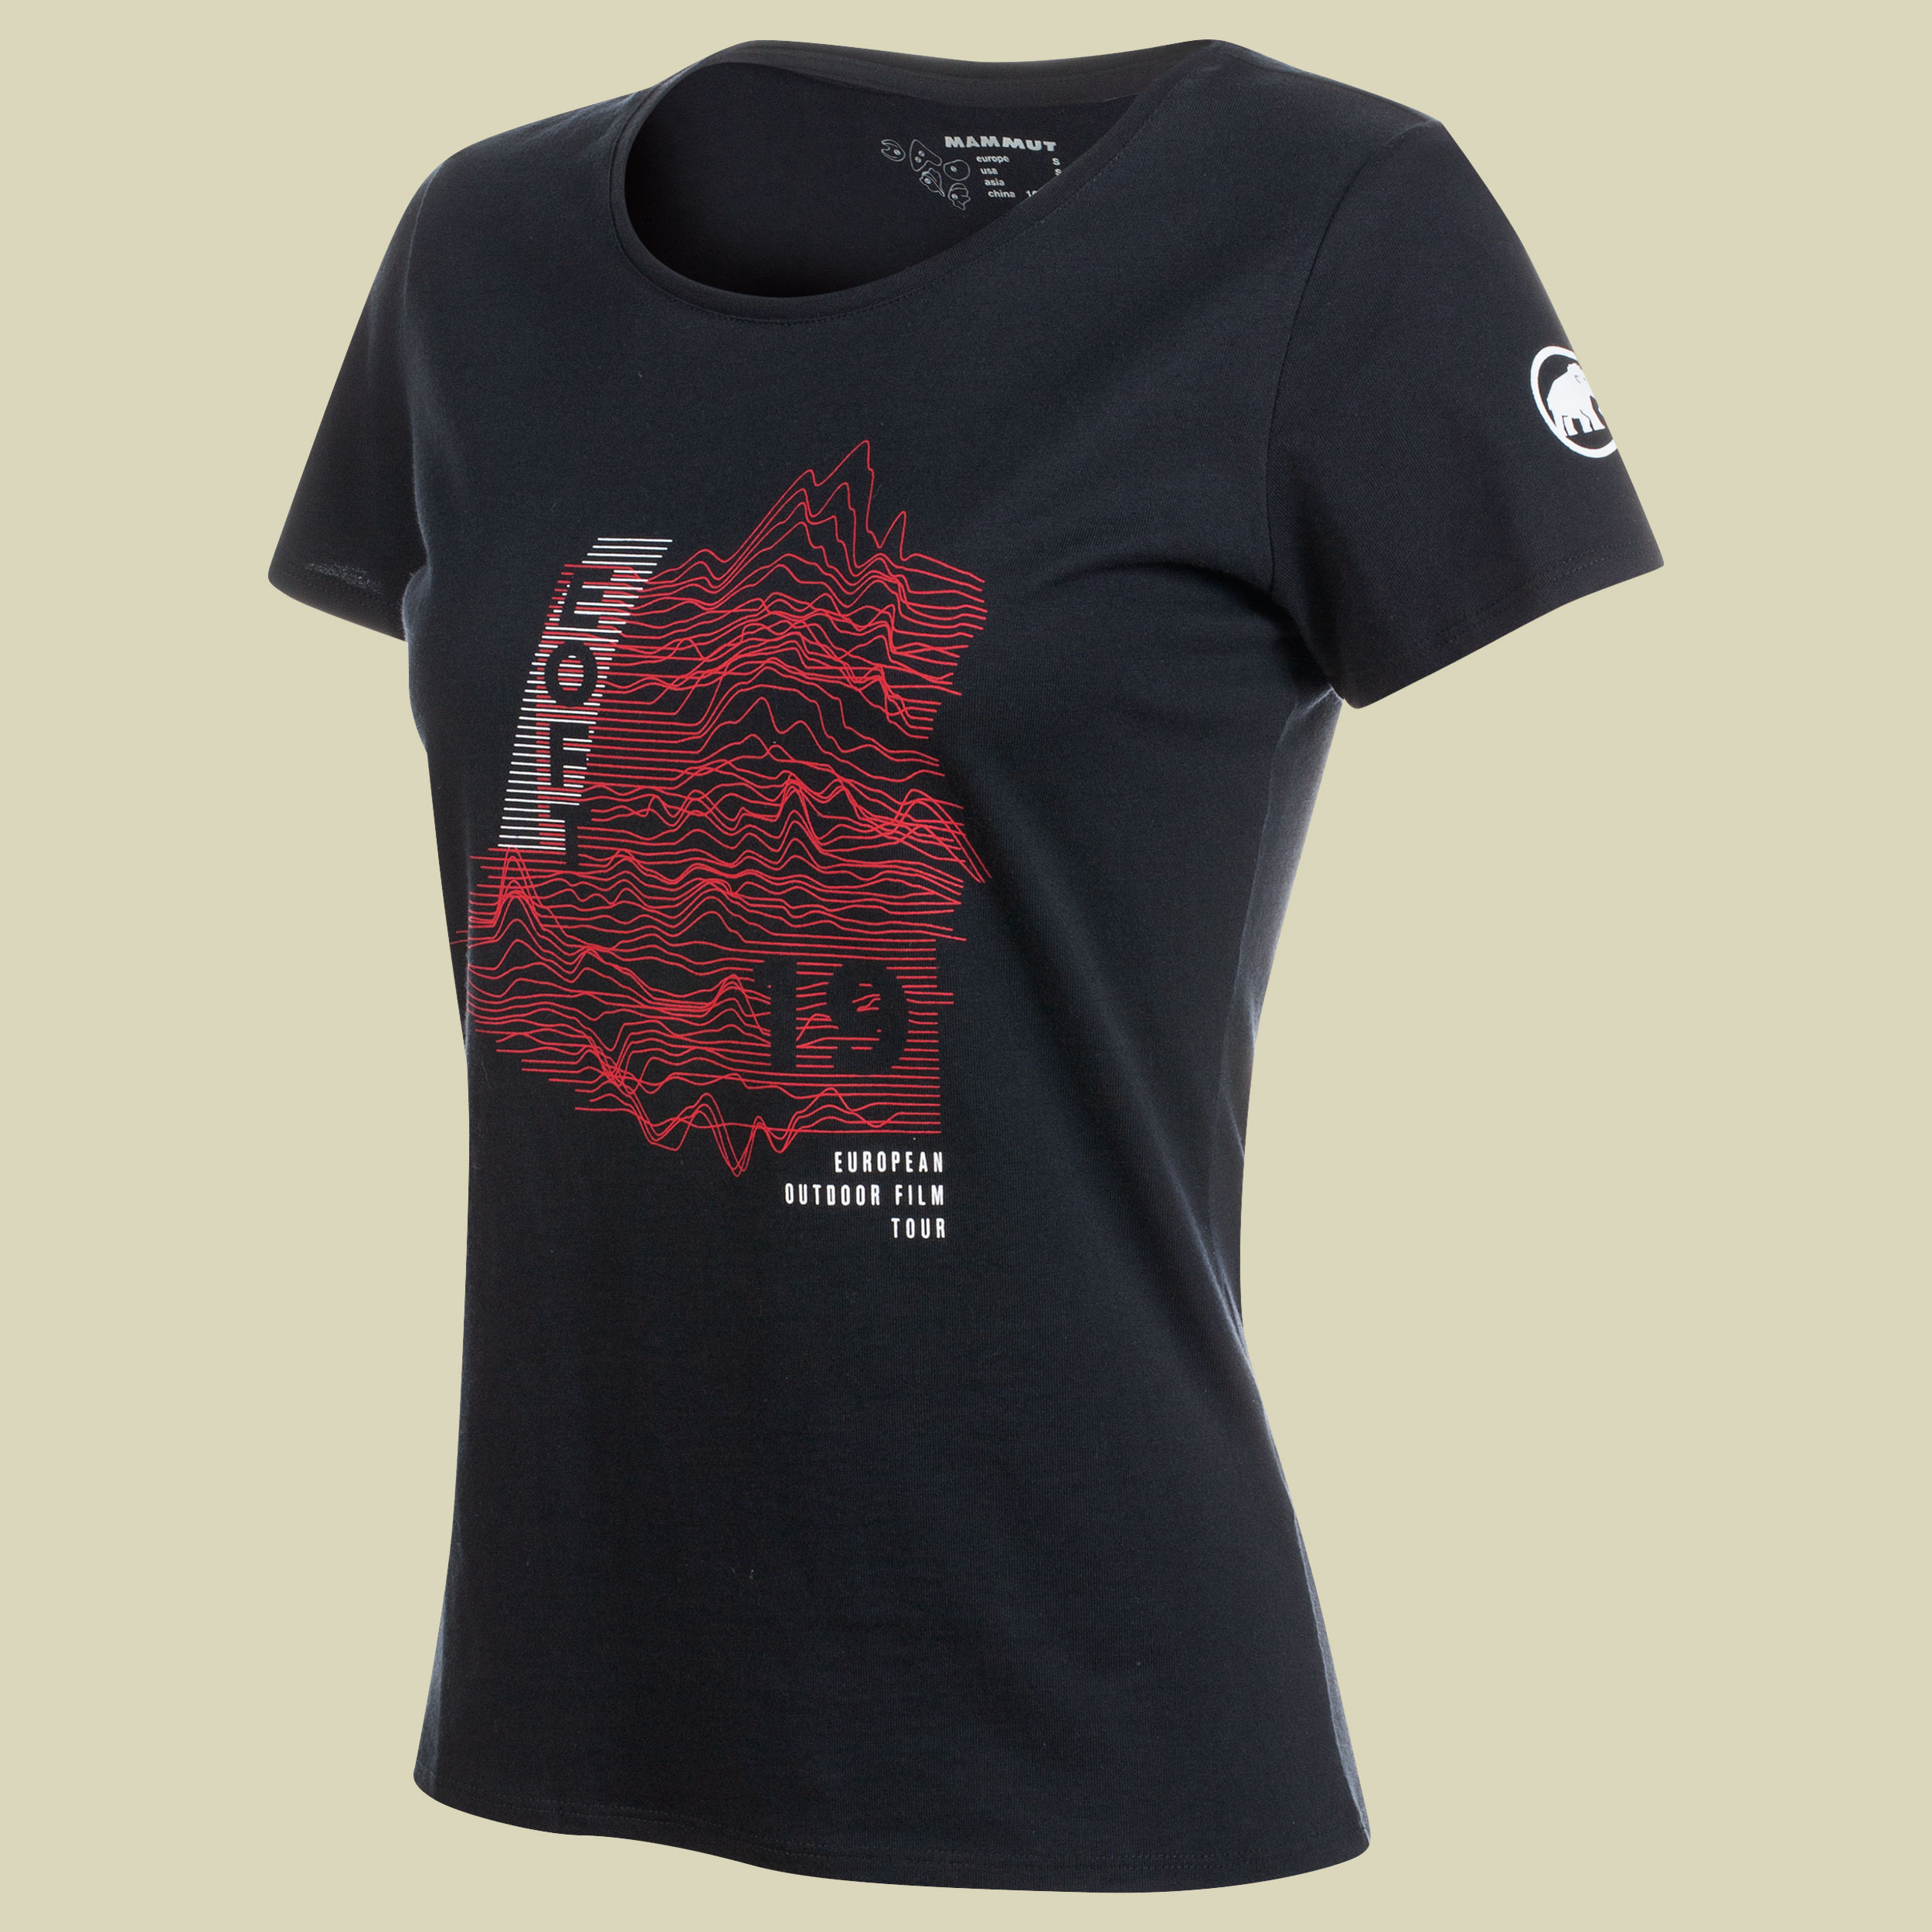 EOFT T-Shirt Women 2019/20 Größe S Farbe black